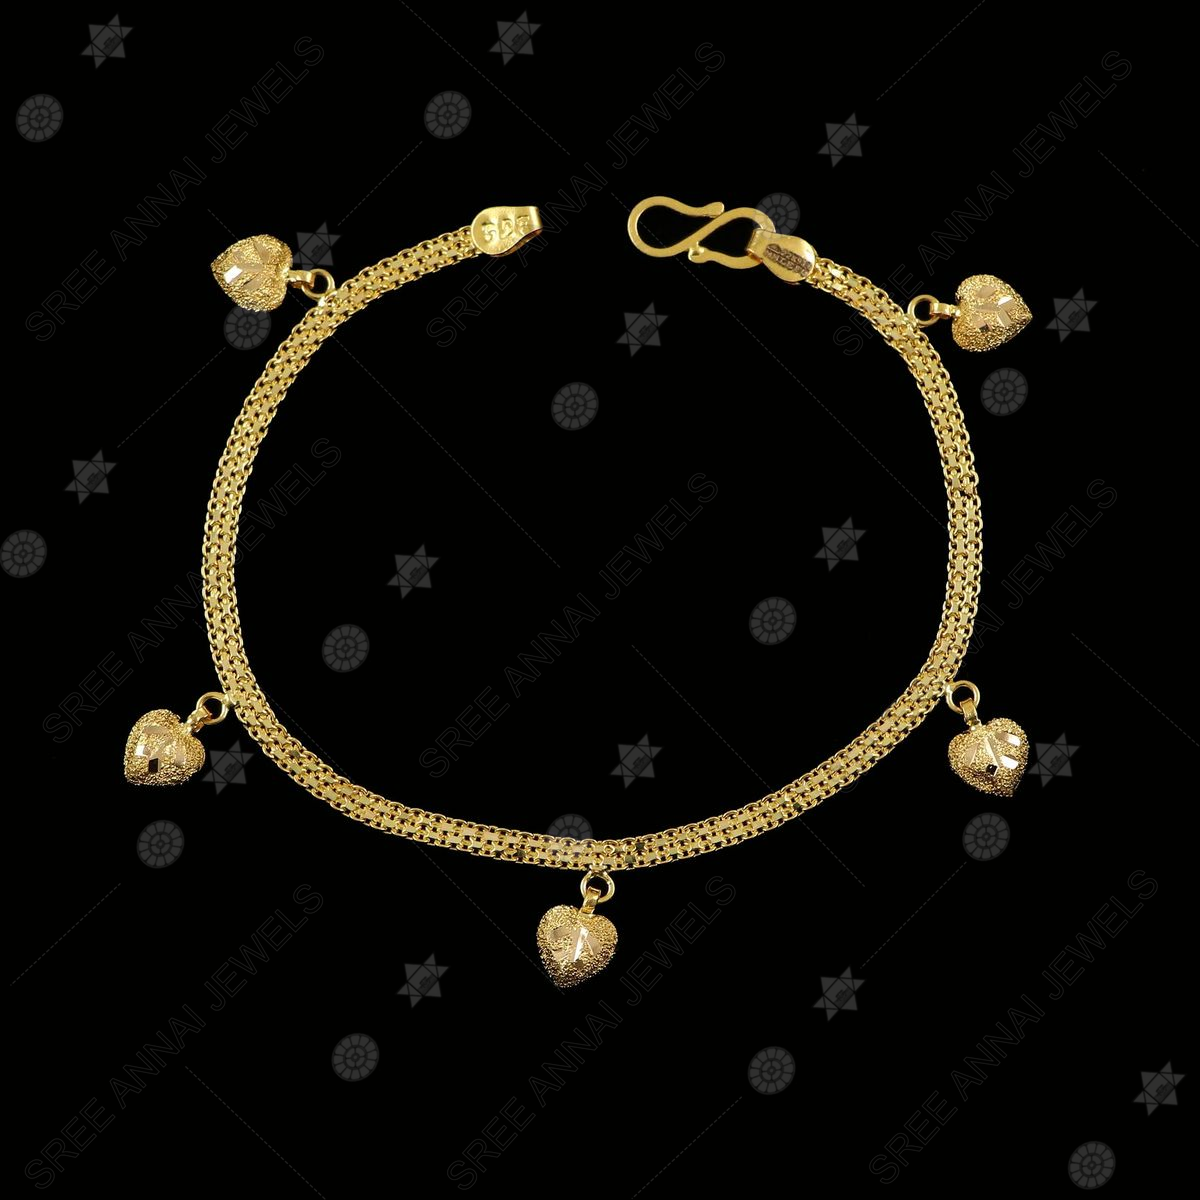 Mantasha Gold Bracelet from Senco Gold & Diamonds